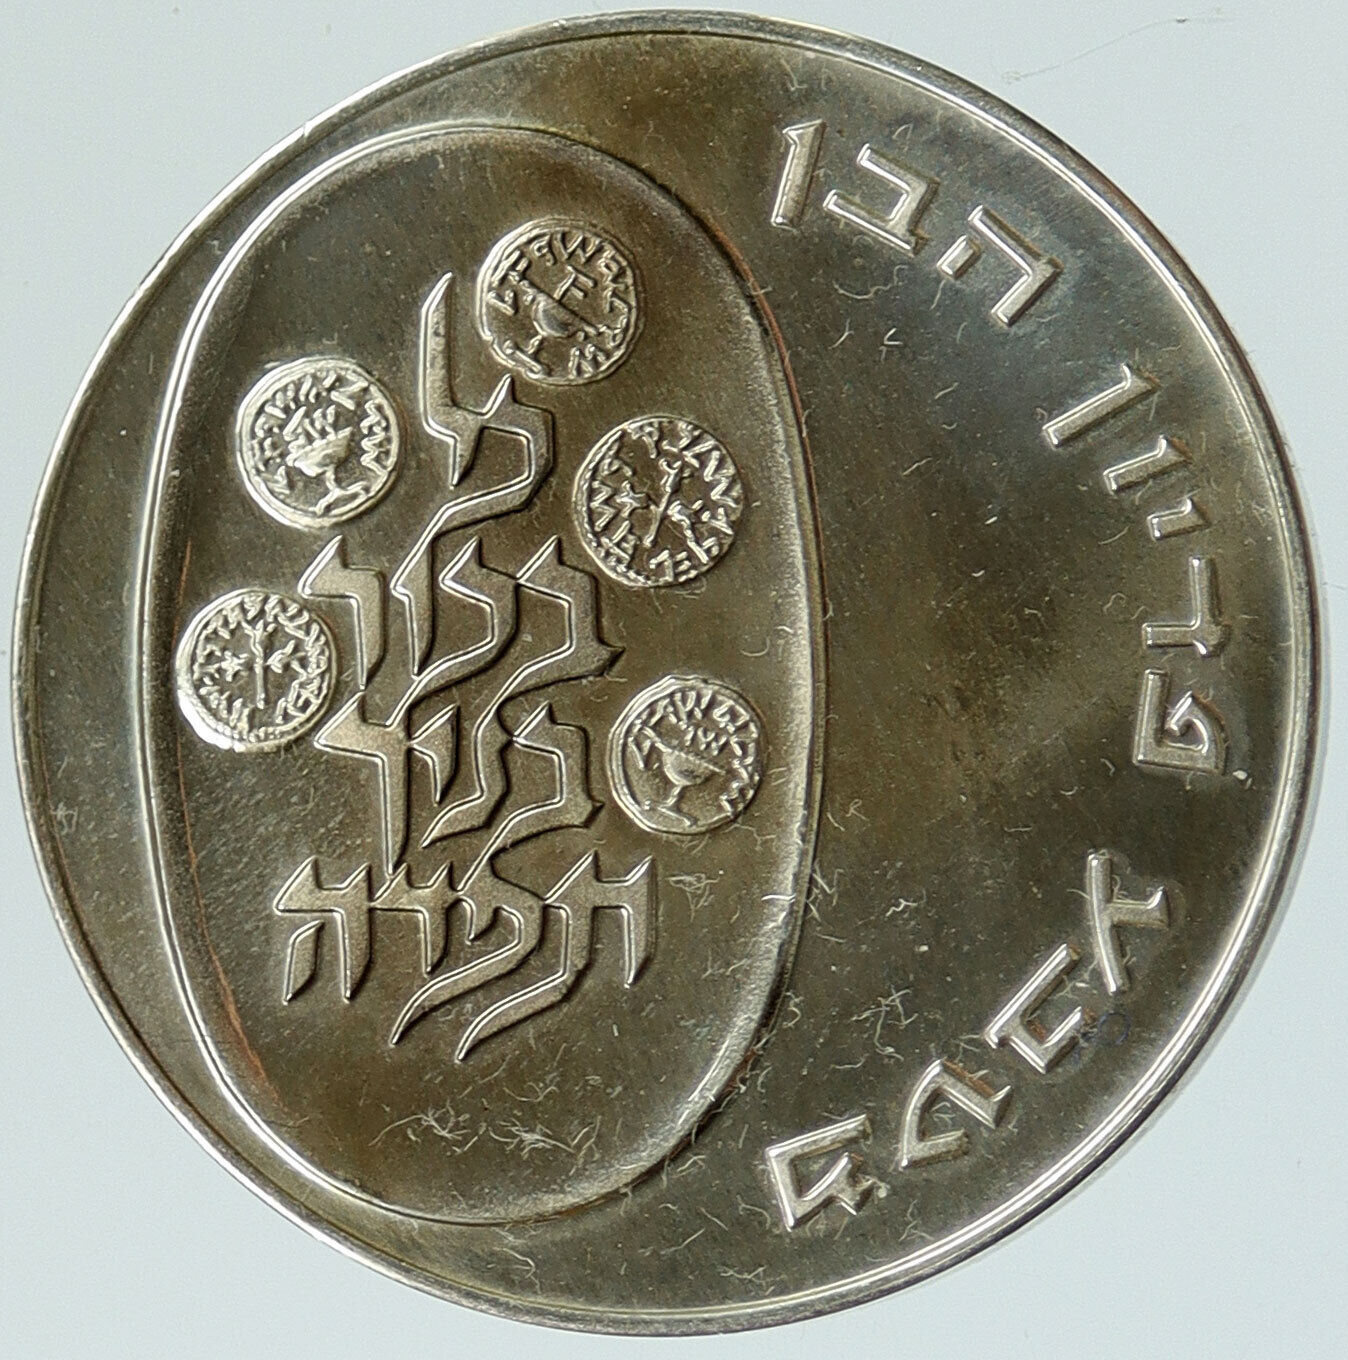 1974 ISRAEL Jewish 1stBorn Son PIDYON HABEN Old BU Silver 10 Lirot Coin i116775